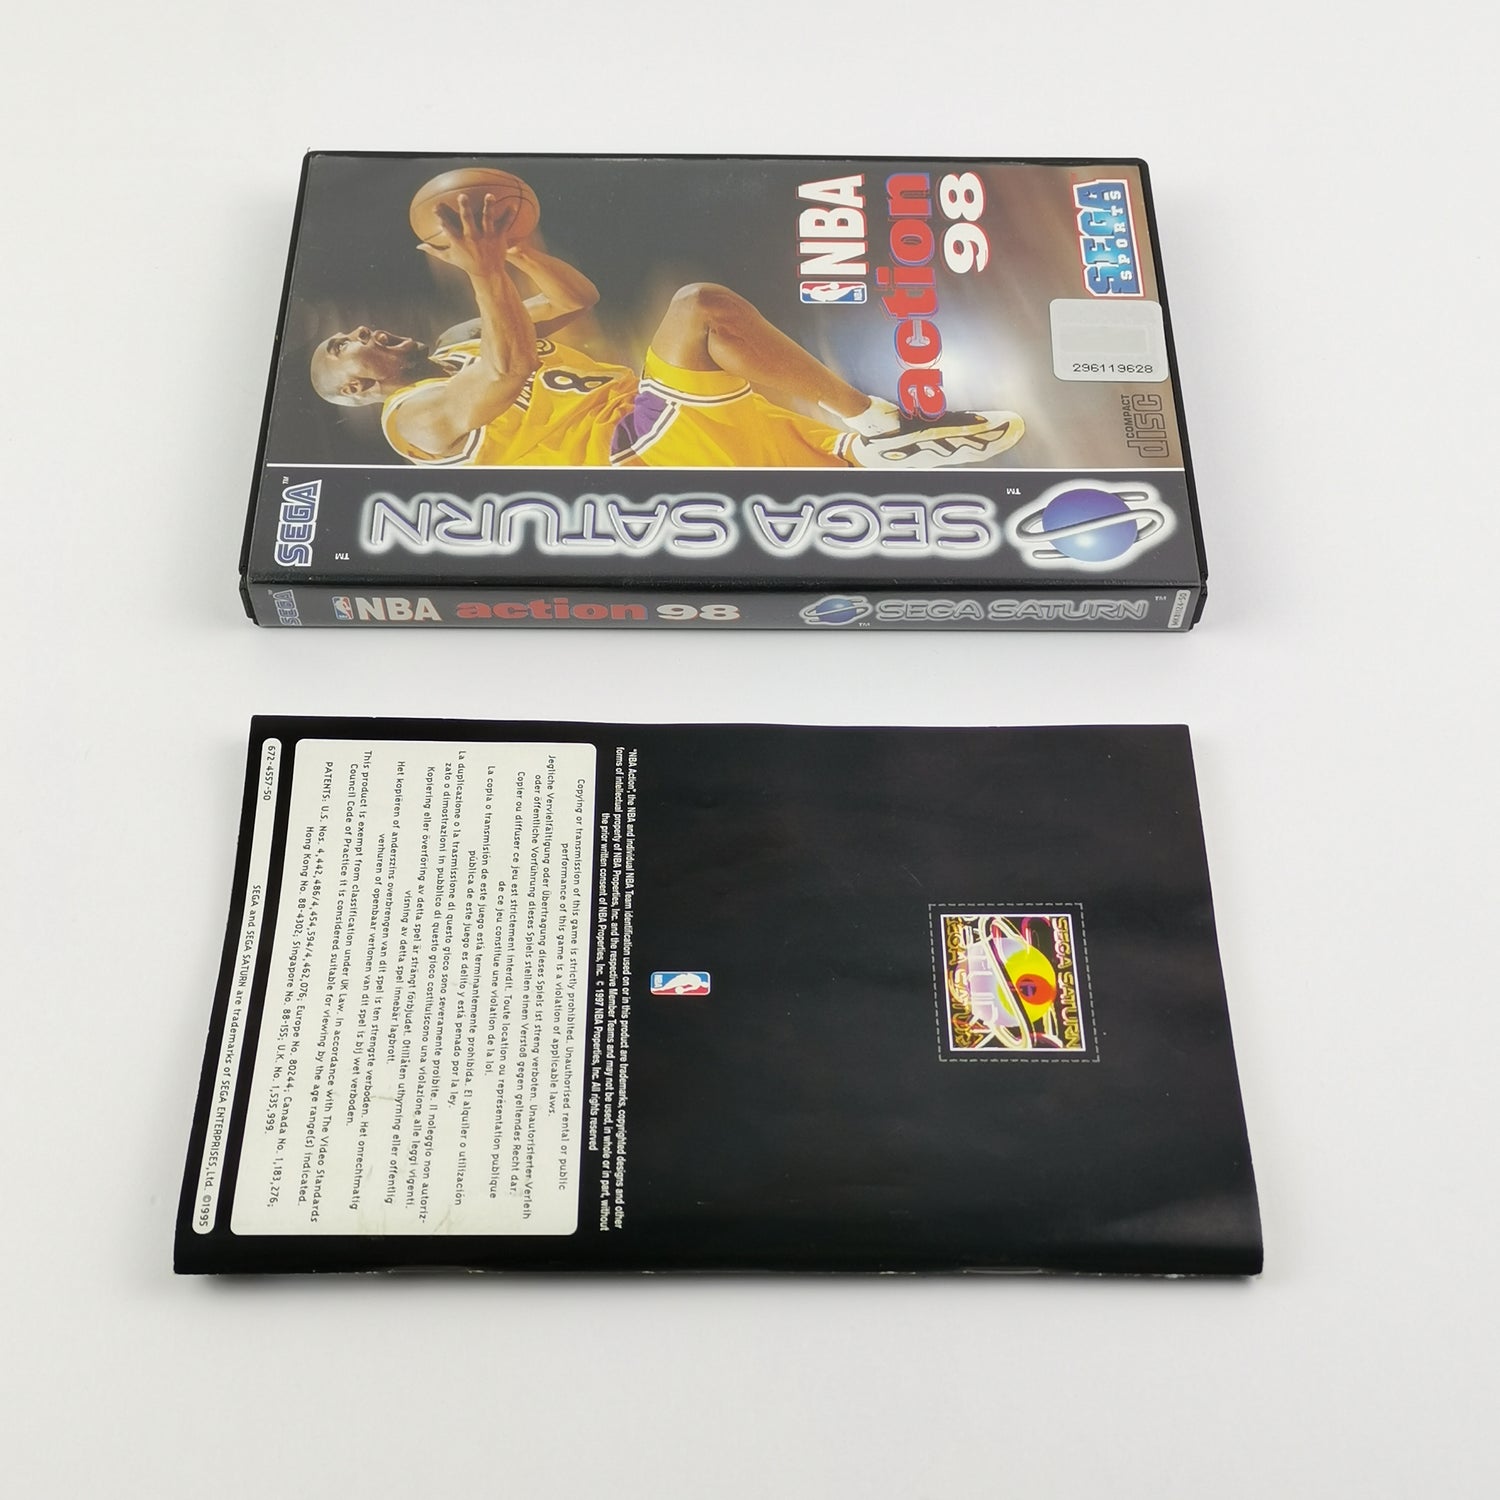 Sega Saturn Game: NBA Action 98 Basketball - Original Packaging & Instructions PAL CD Disc